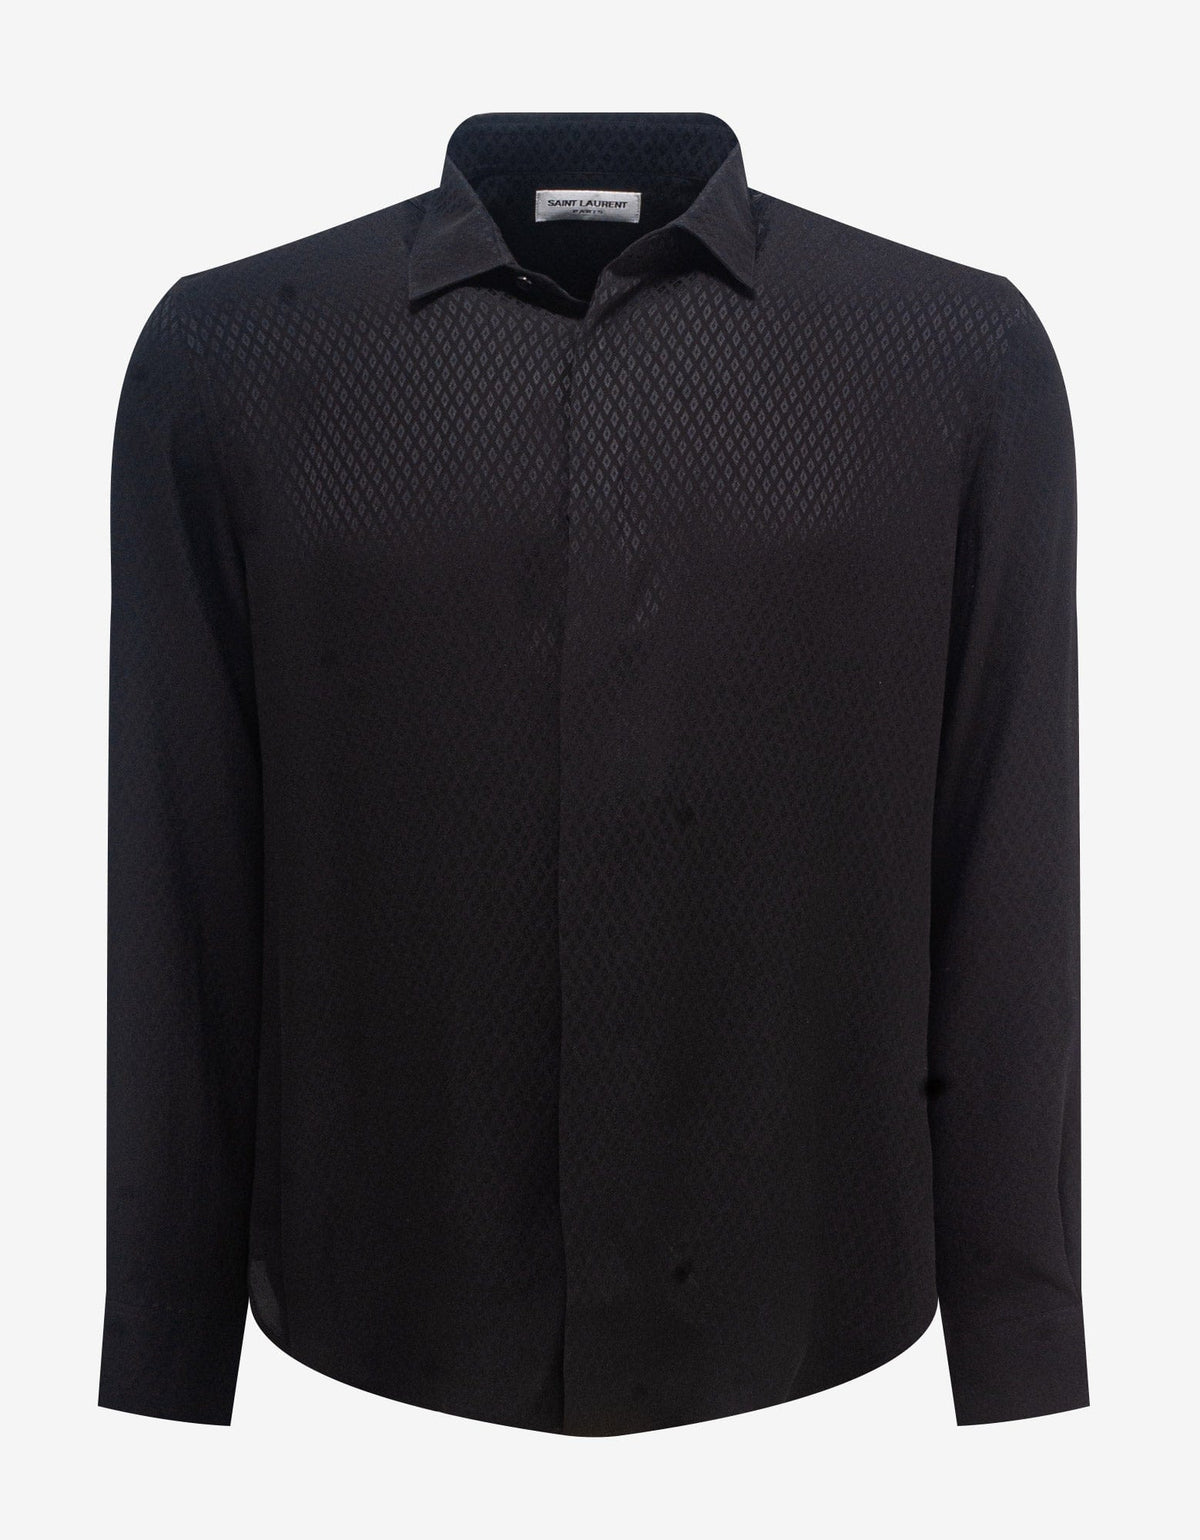 Saint Laurent Black Diamond Jacquard Silk Shirt